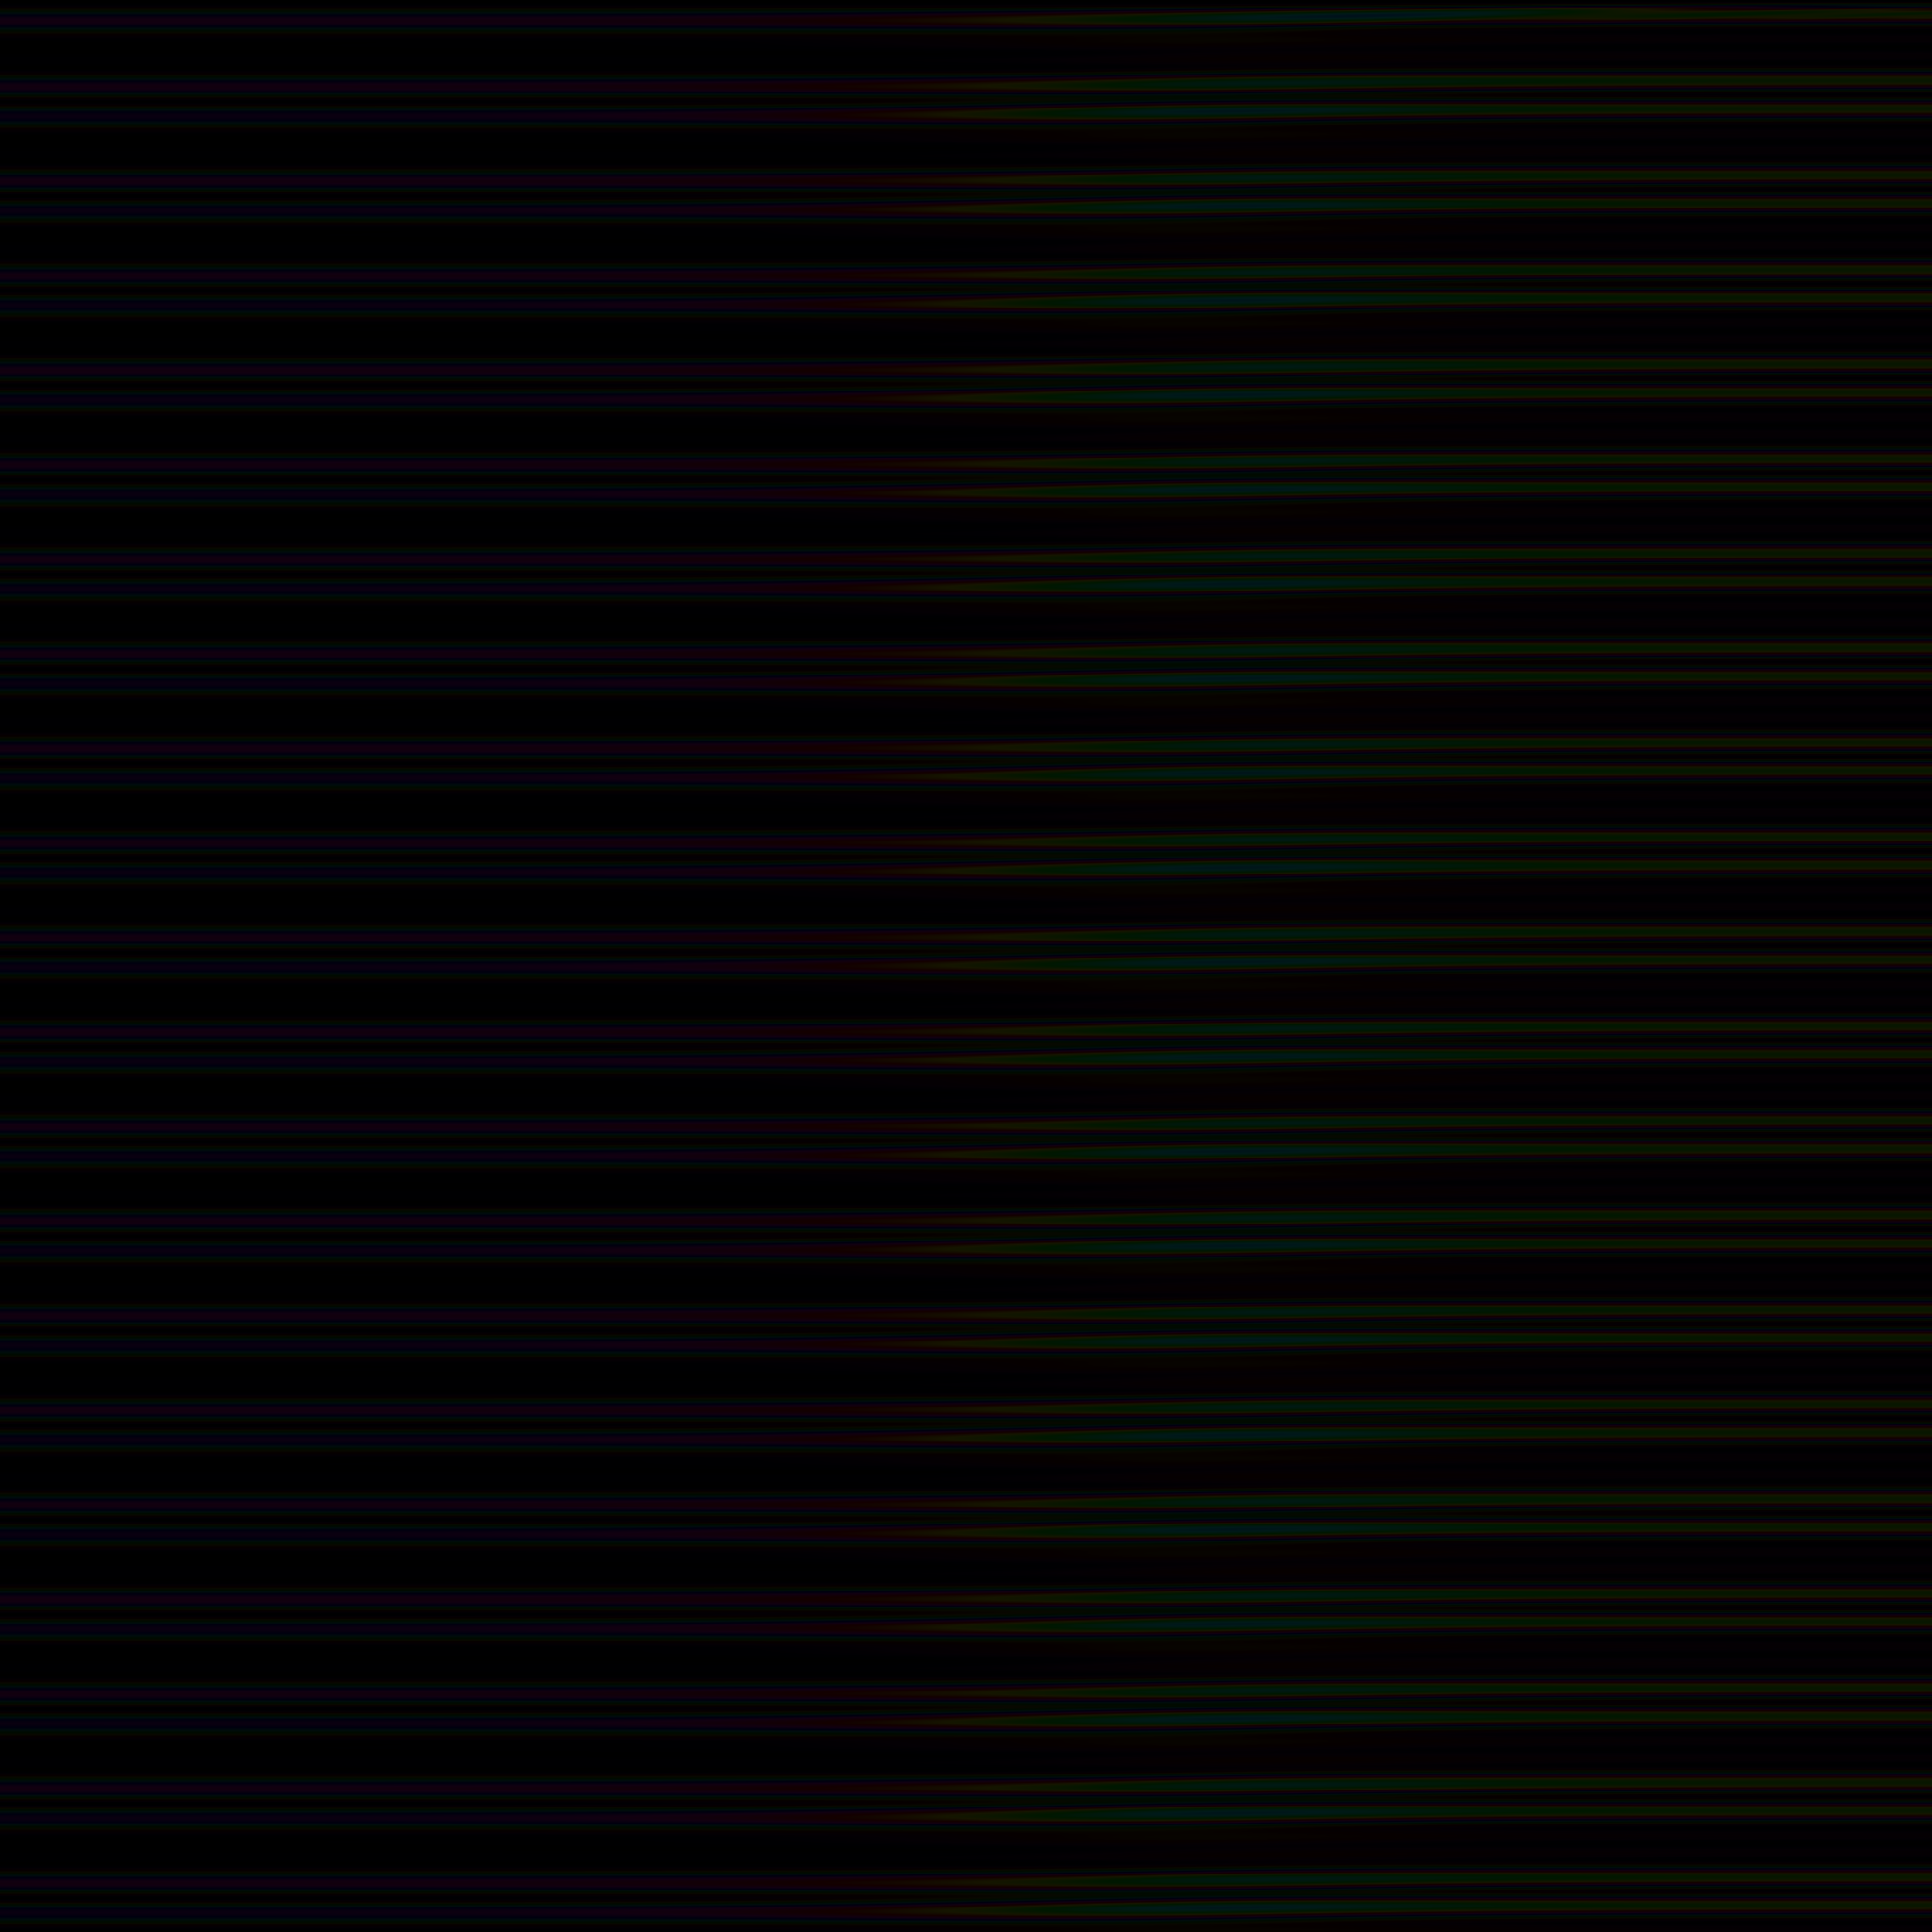 DST spectrum at μ0=0.9